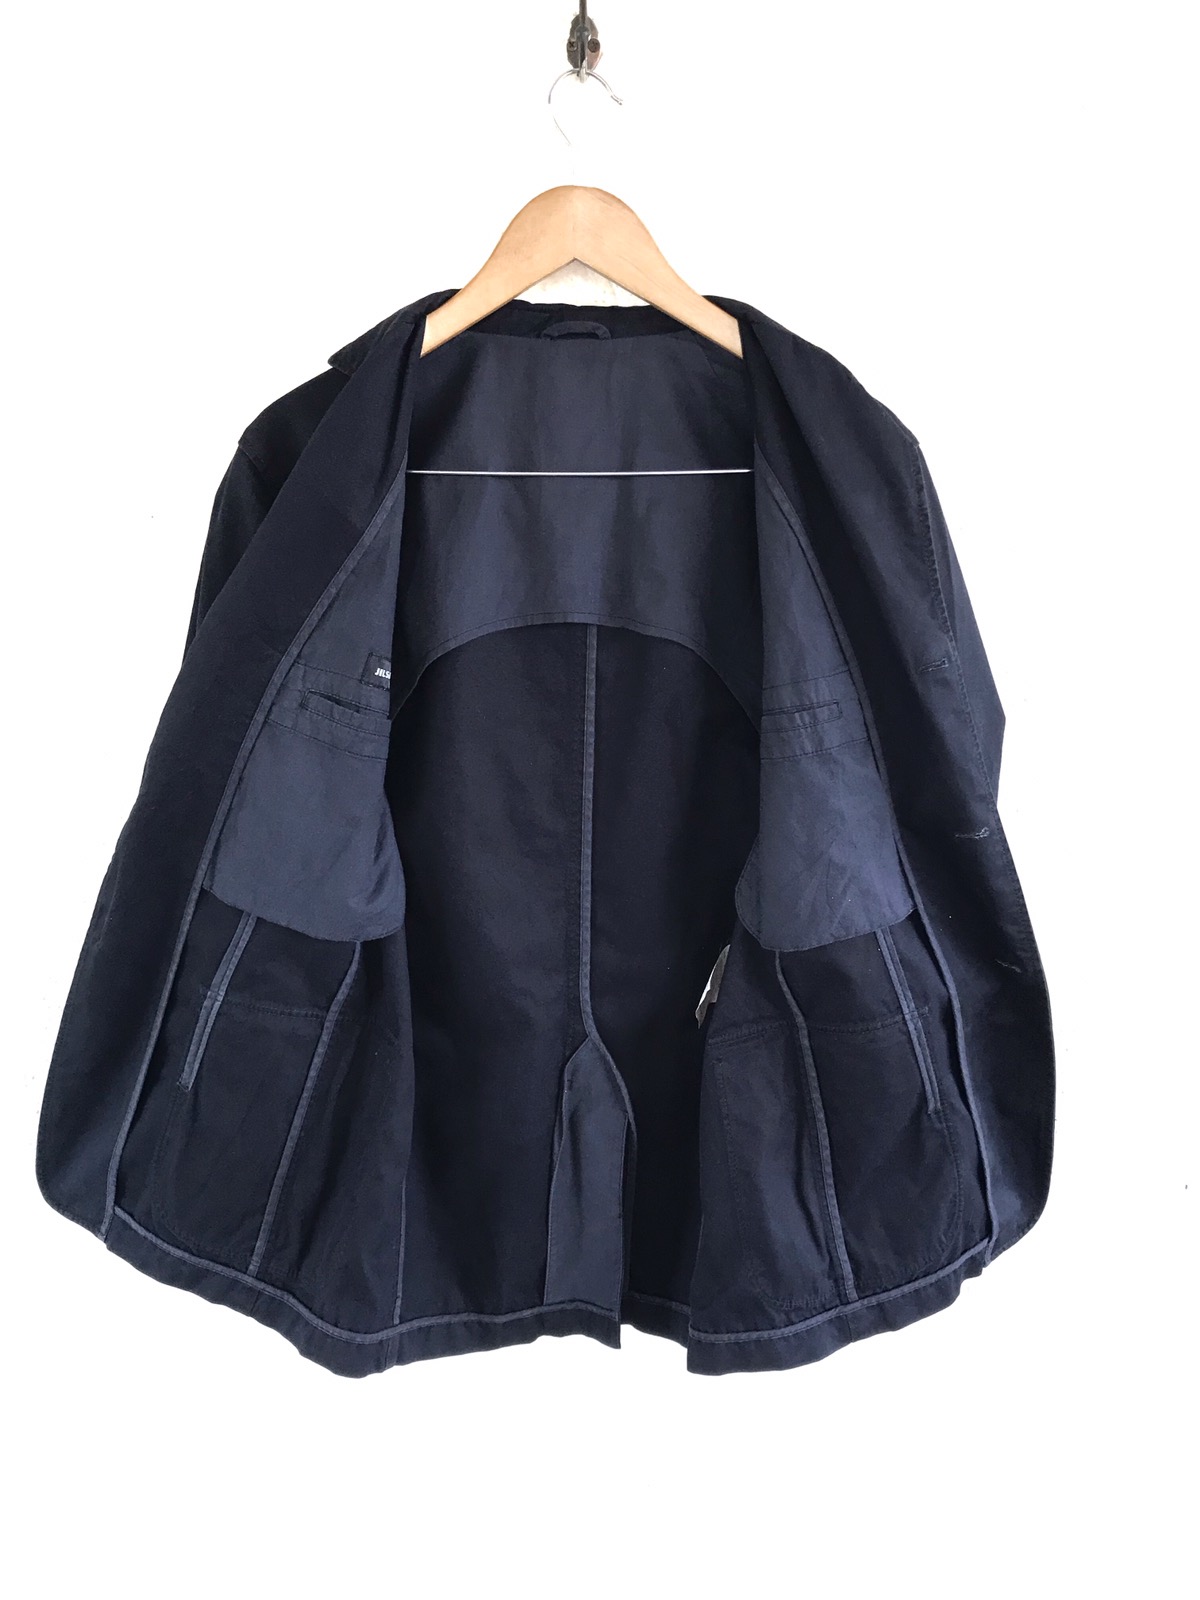 Jil Sander Black Jacket Blazer Made in Italy - 6